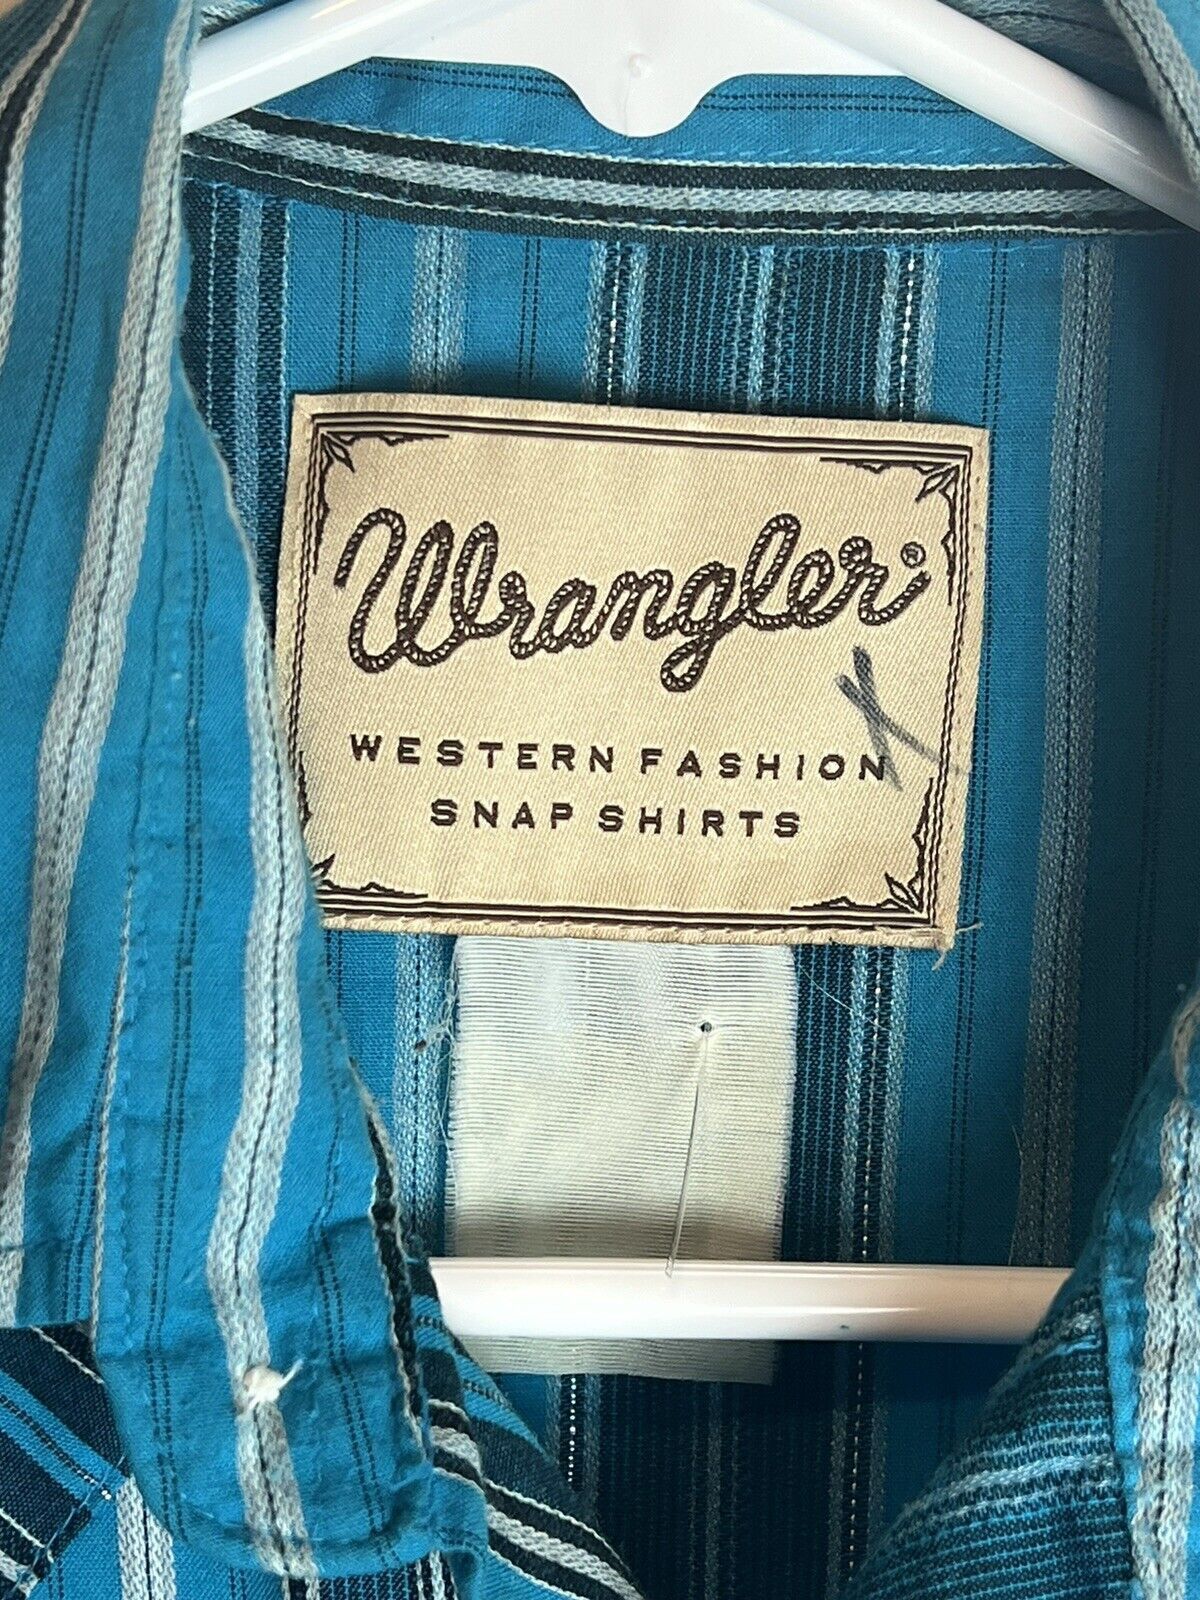 Wrangler Wrangler Wester Fashion Snap Button Up Teal Striped Size US L / EU 52-54 / 3 - 4 Preview